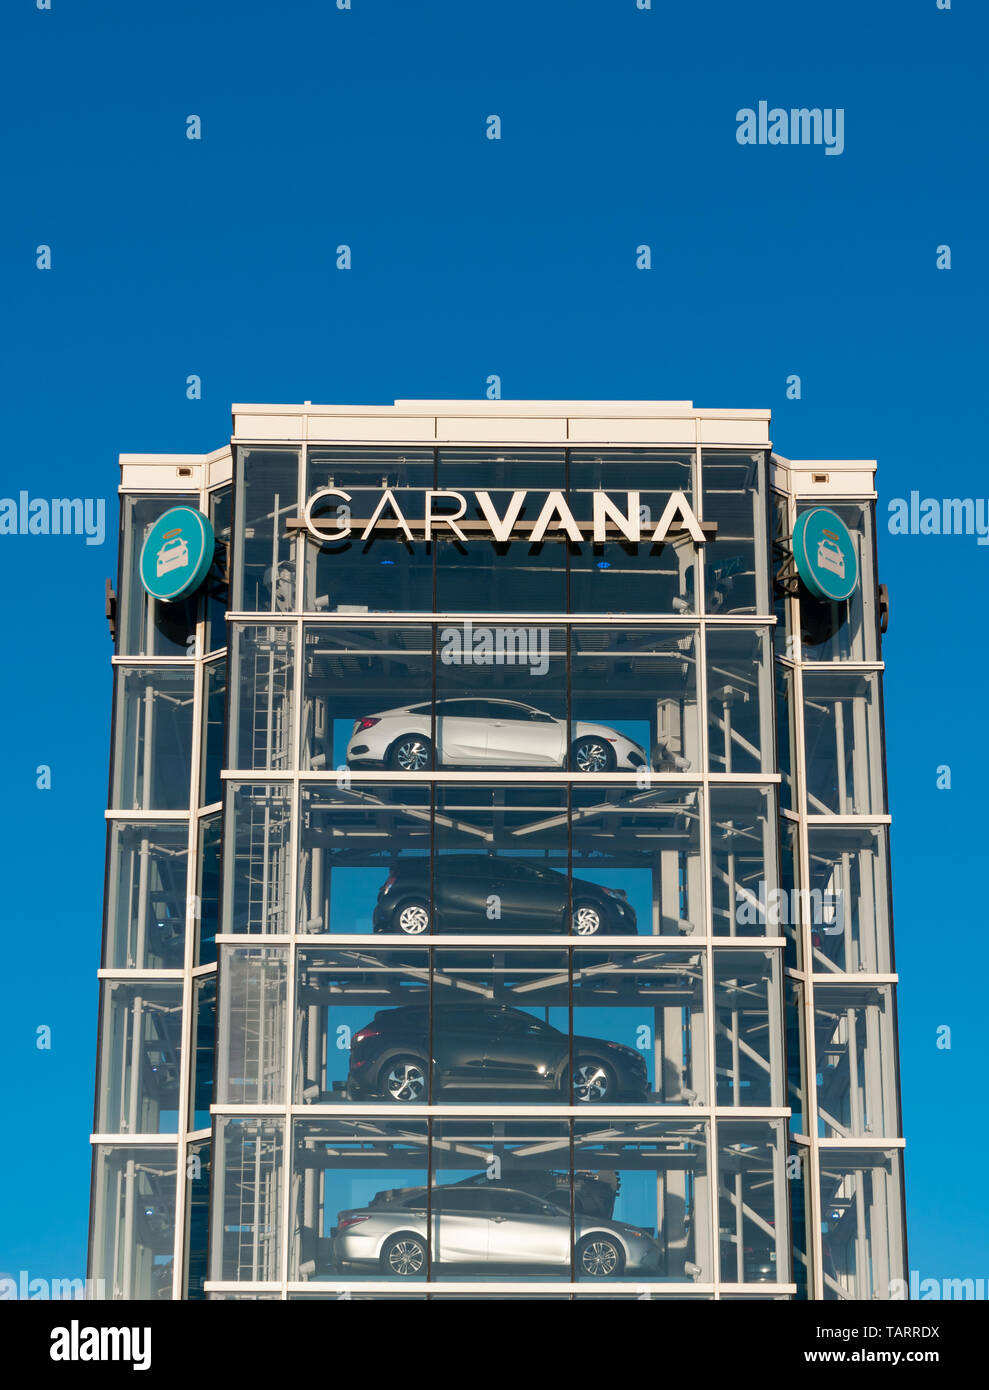 TEMPE, AZ/USA - APRIL 10, 2019: Carvana automobile dealership vending machine. Carvana is an online-only used car dealer. Stock Photo